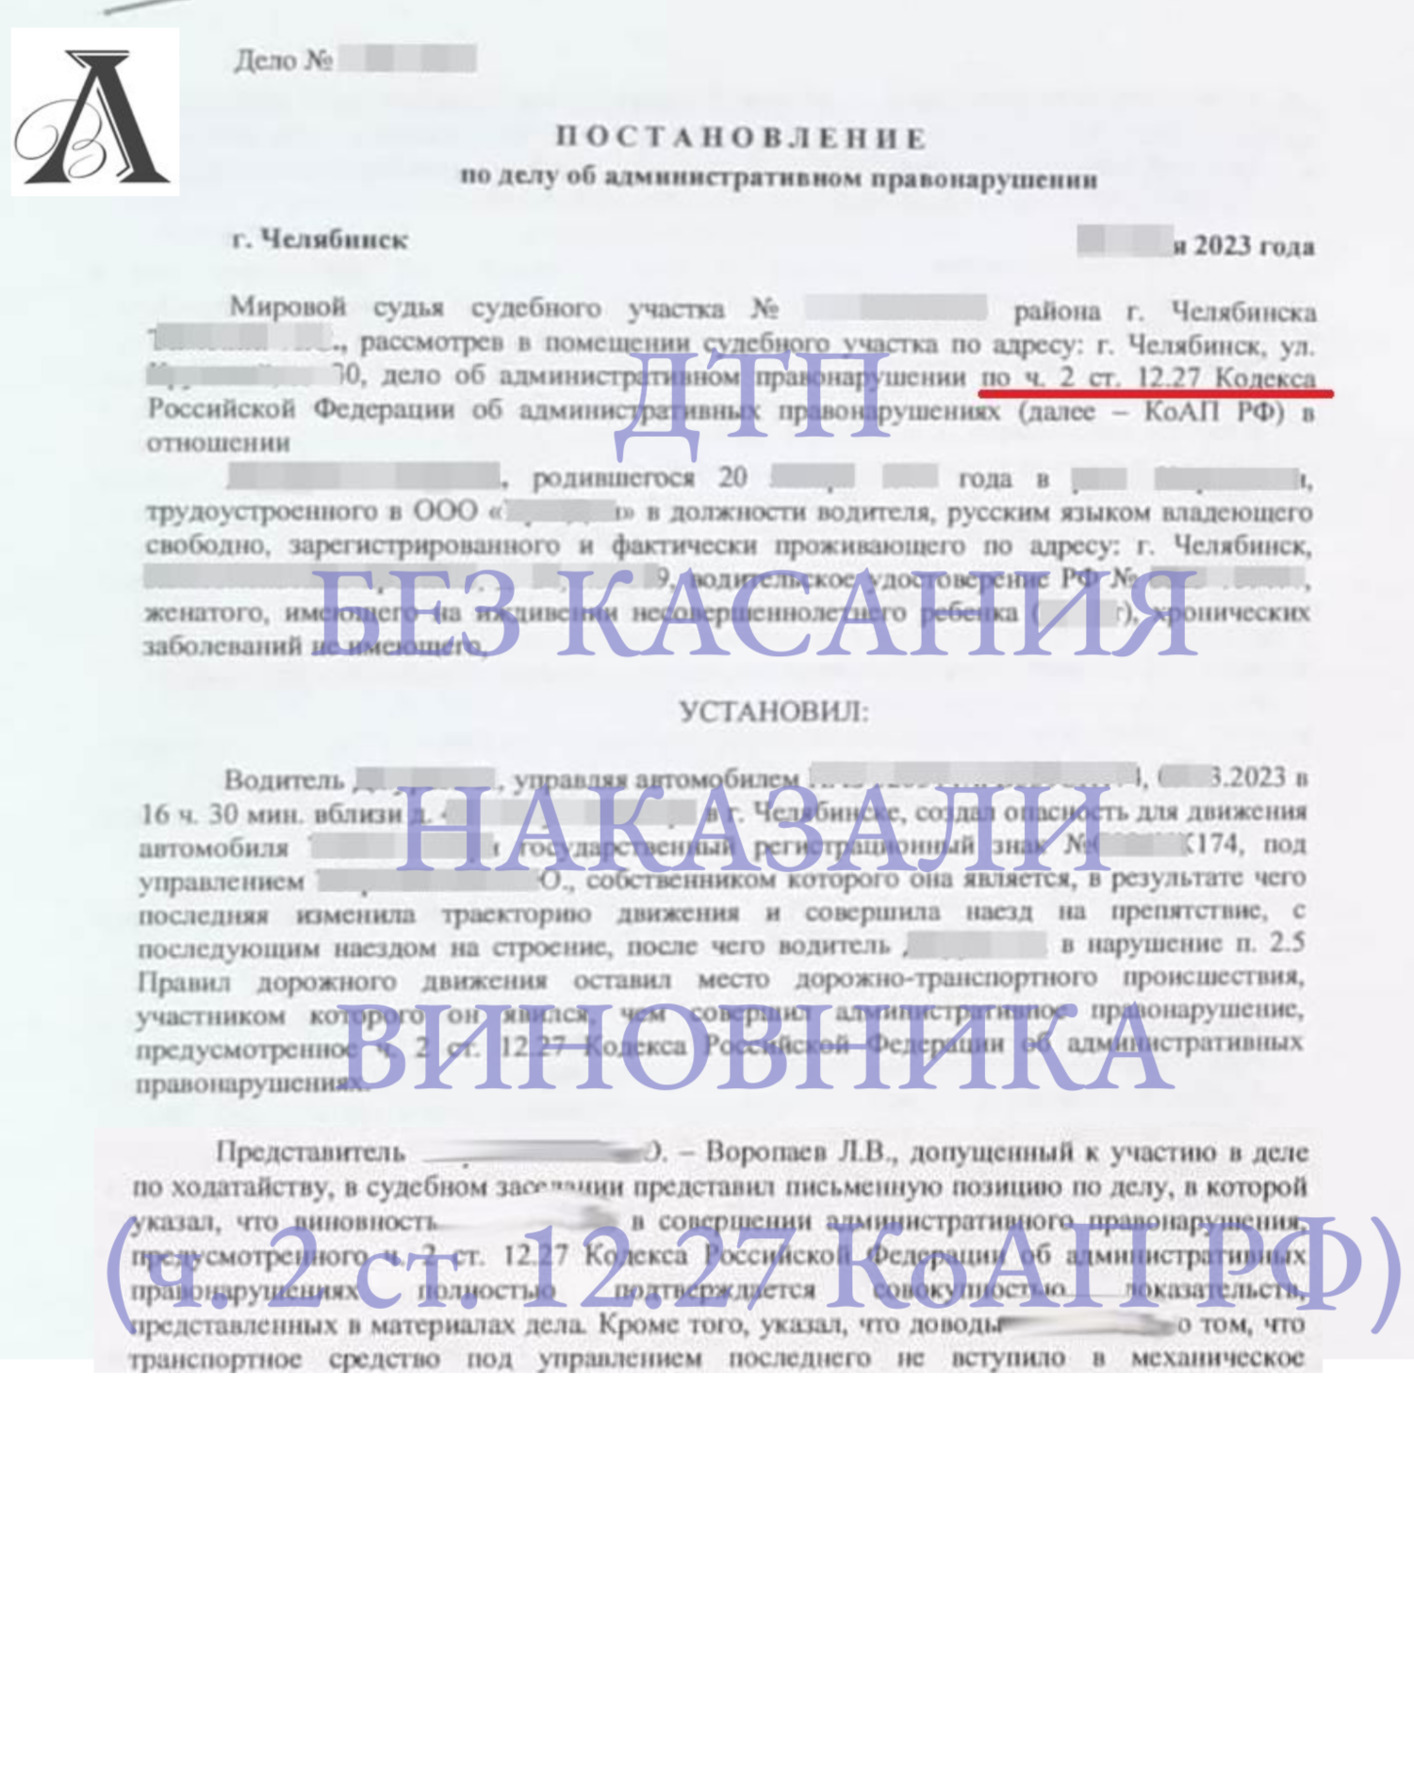 ДТП без касания ч.2 ст. 12.27 КоАП РФ